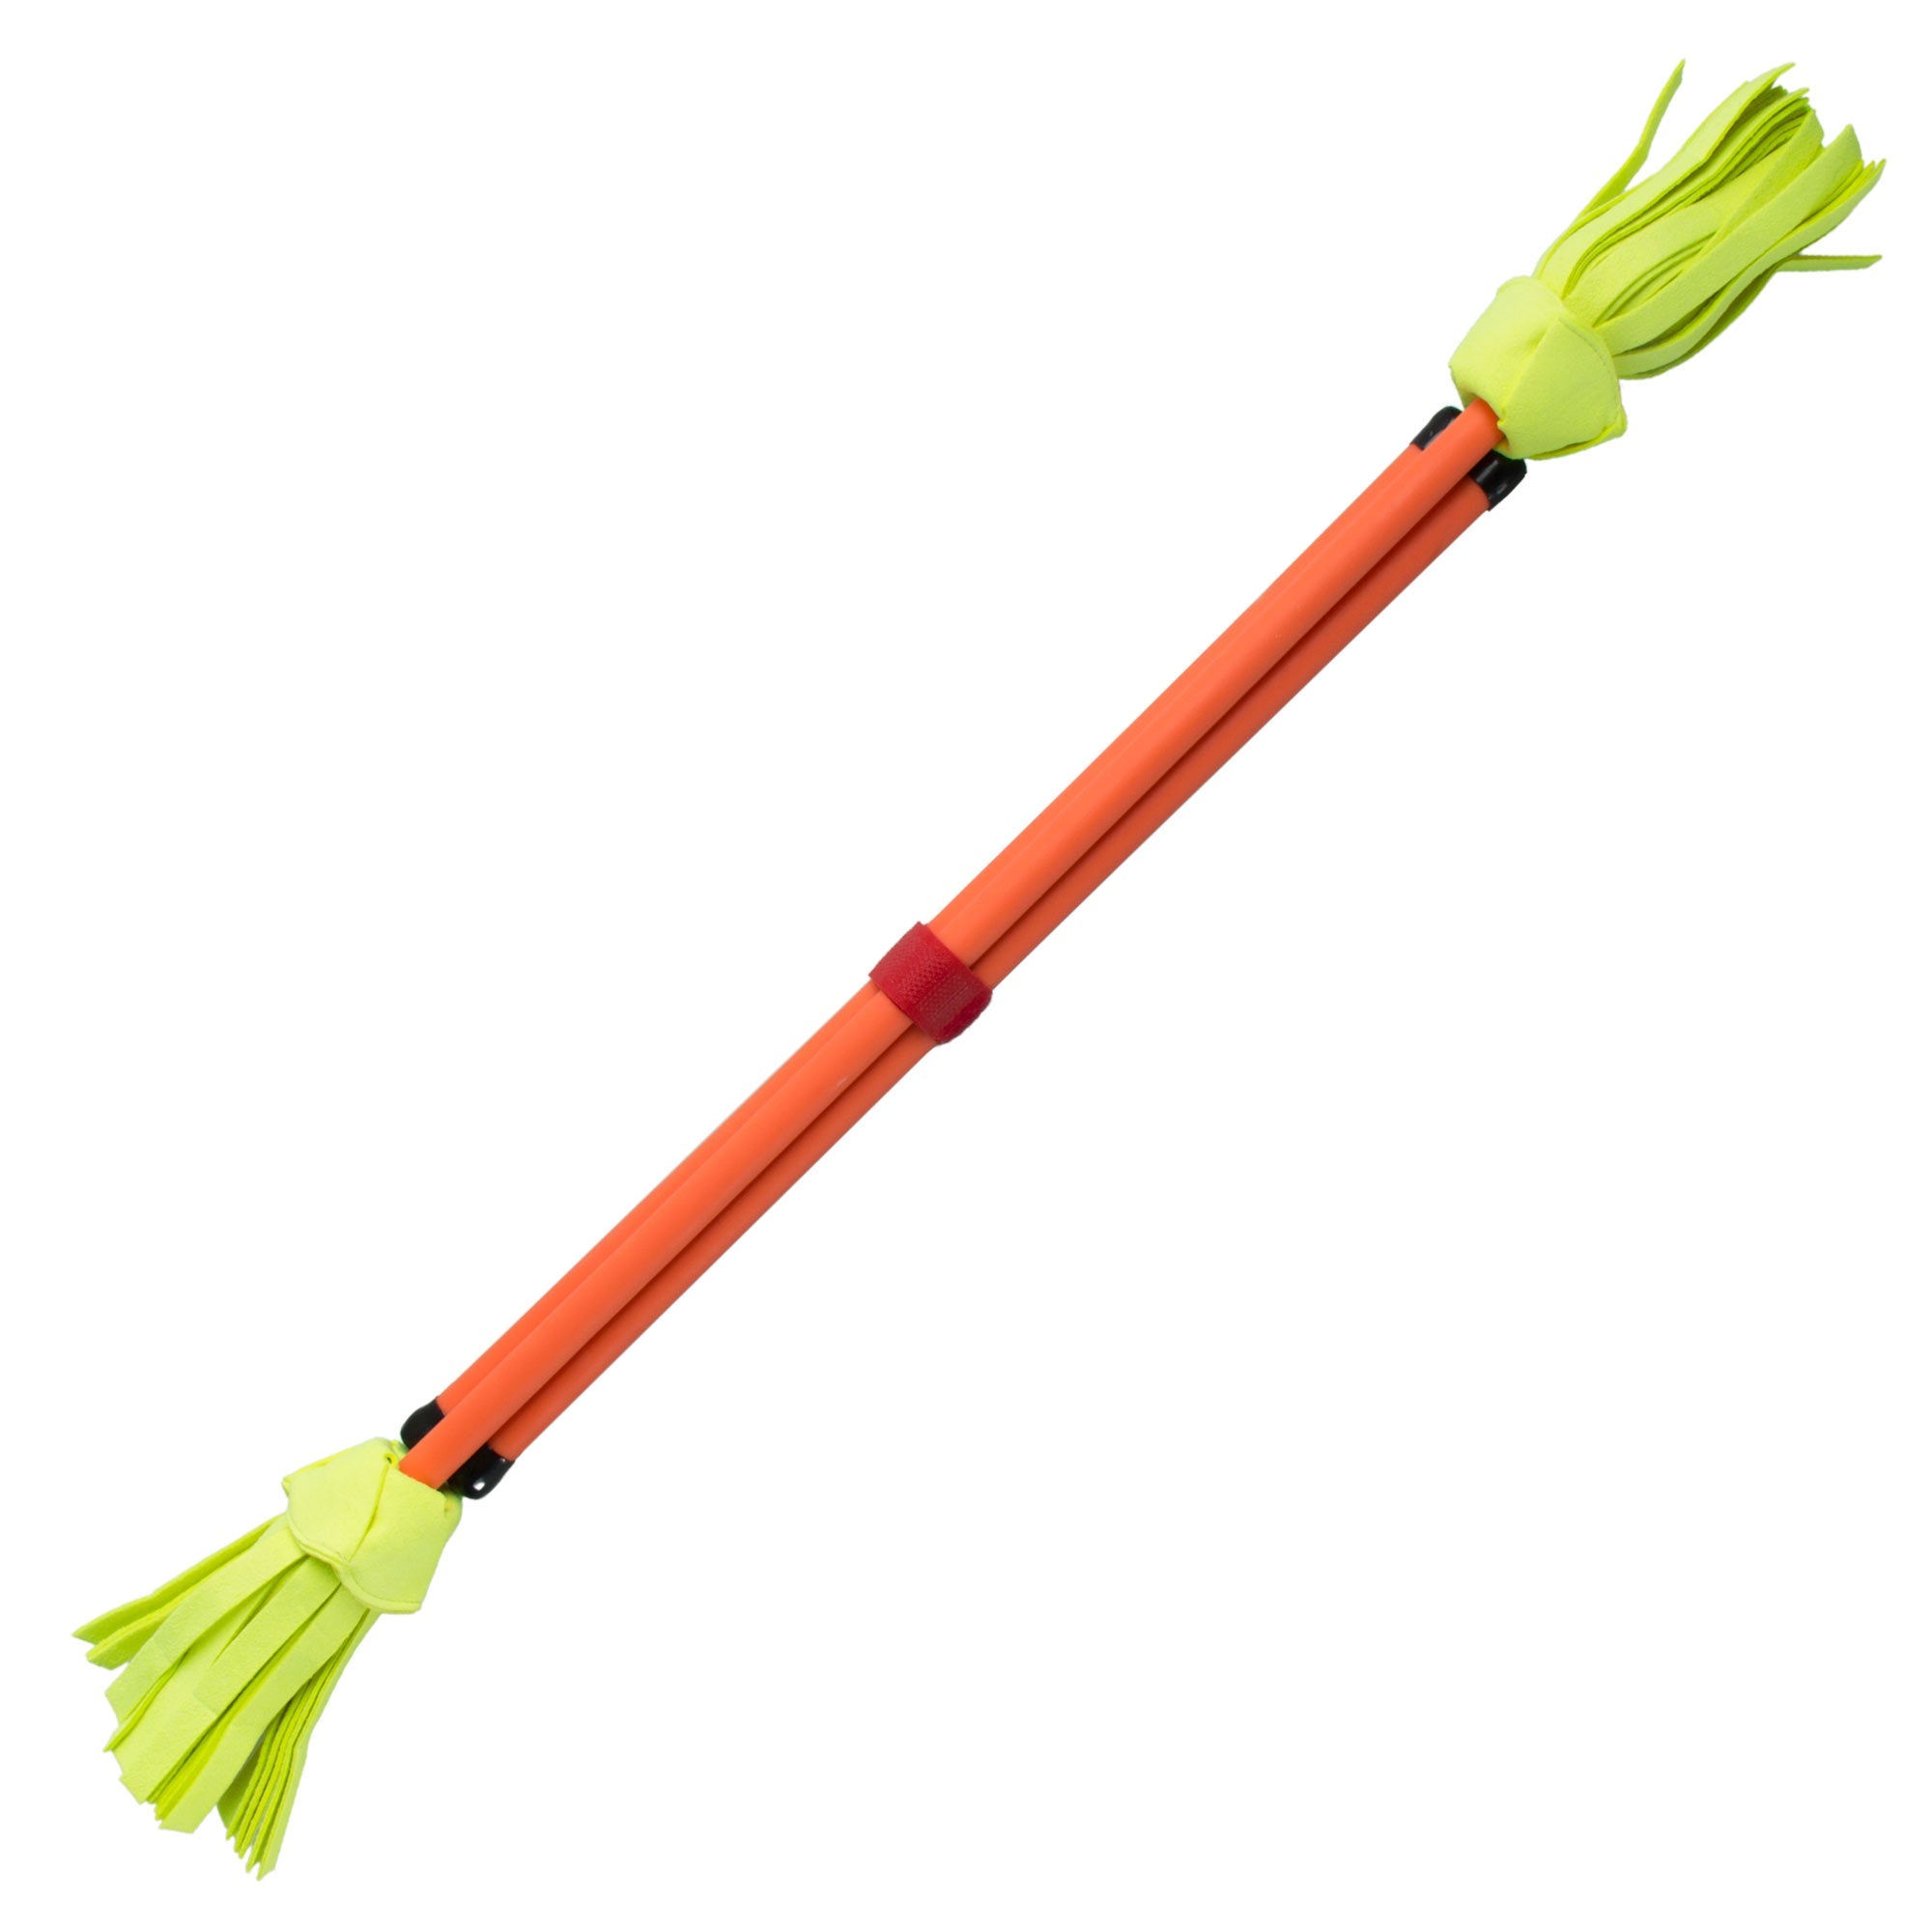 orange neo flower stick and hand sticks strapped together